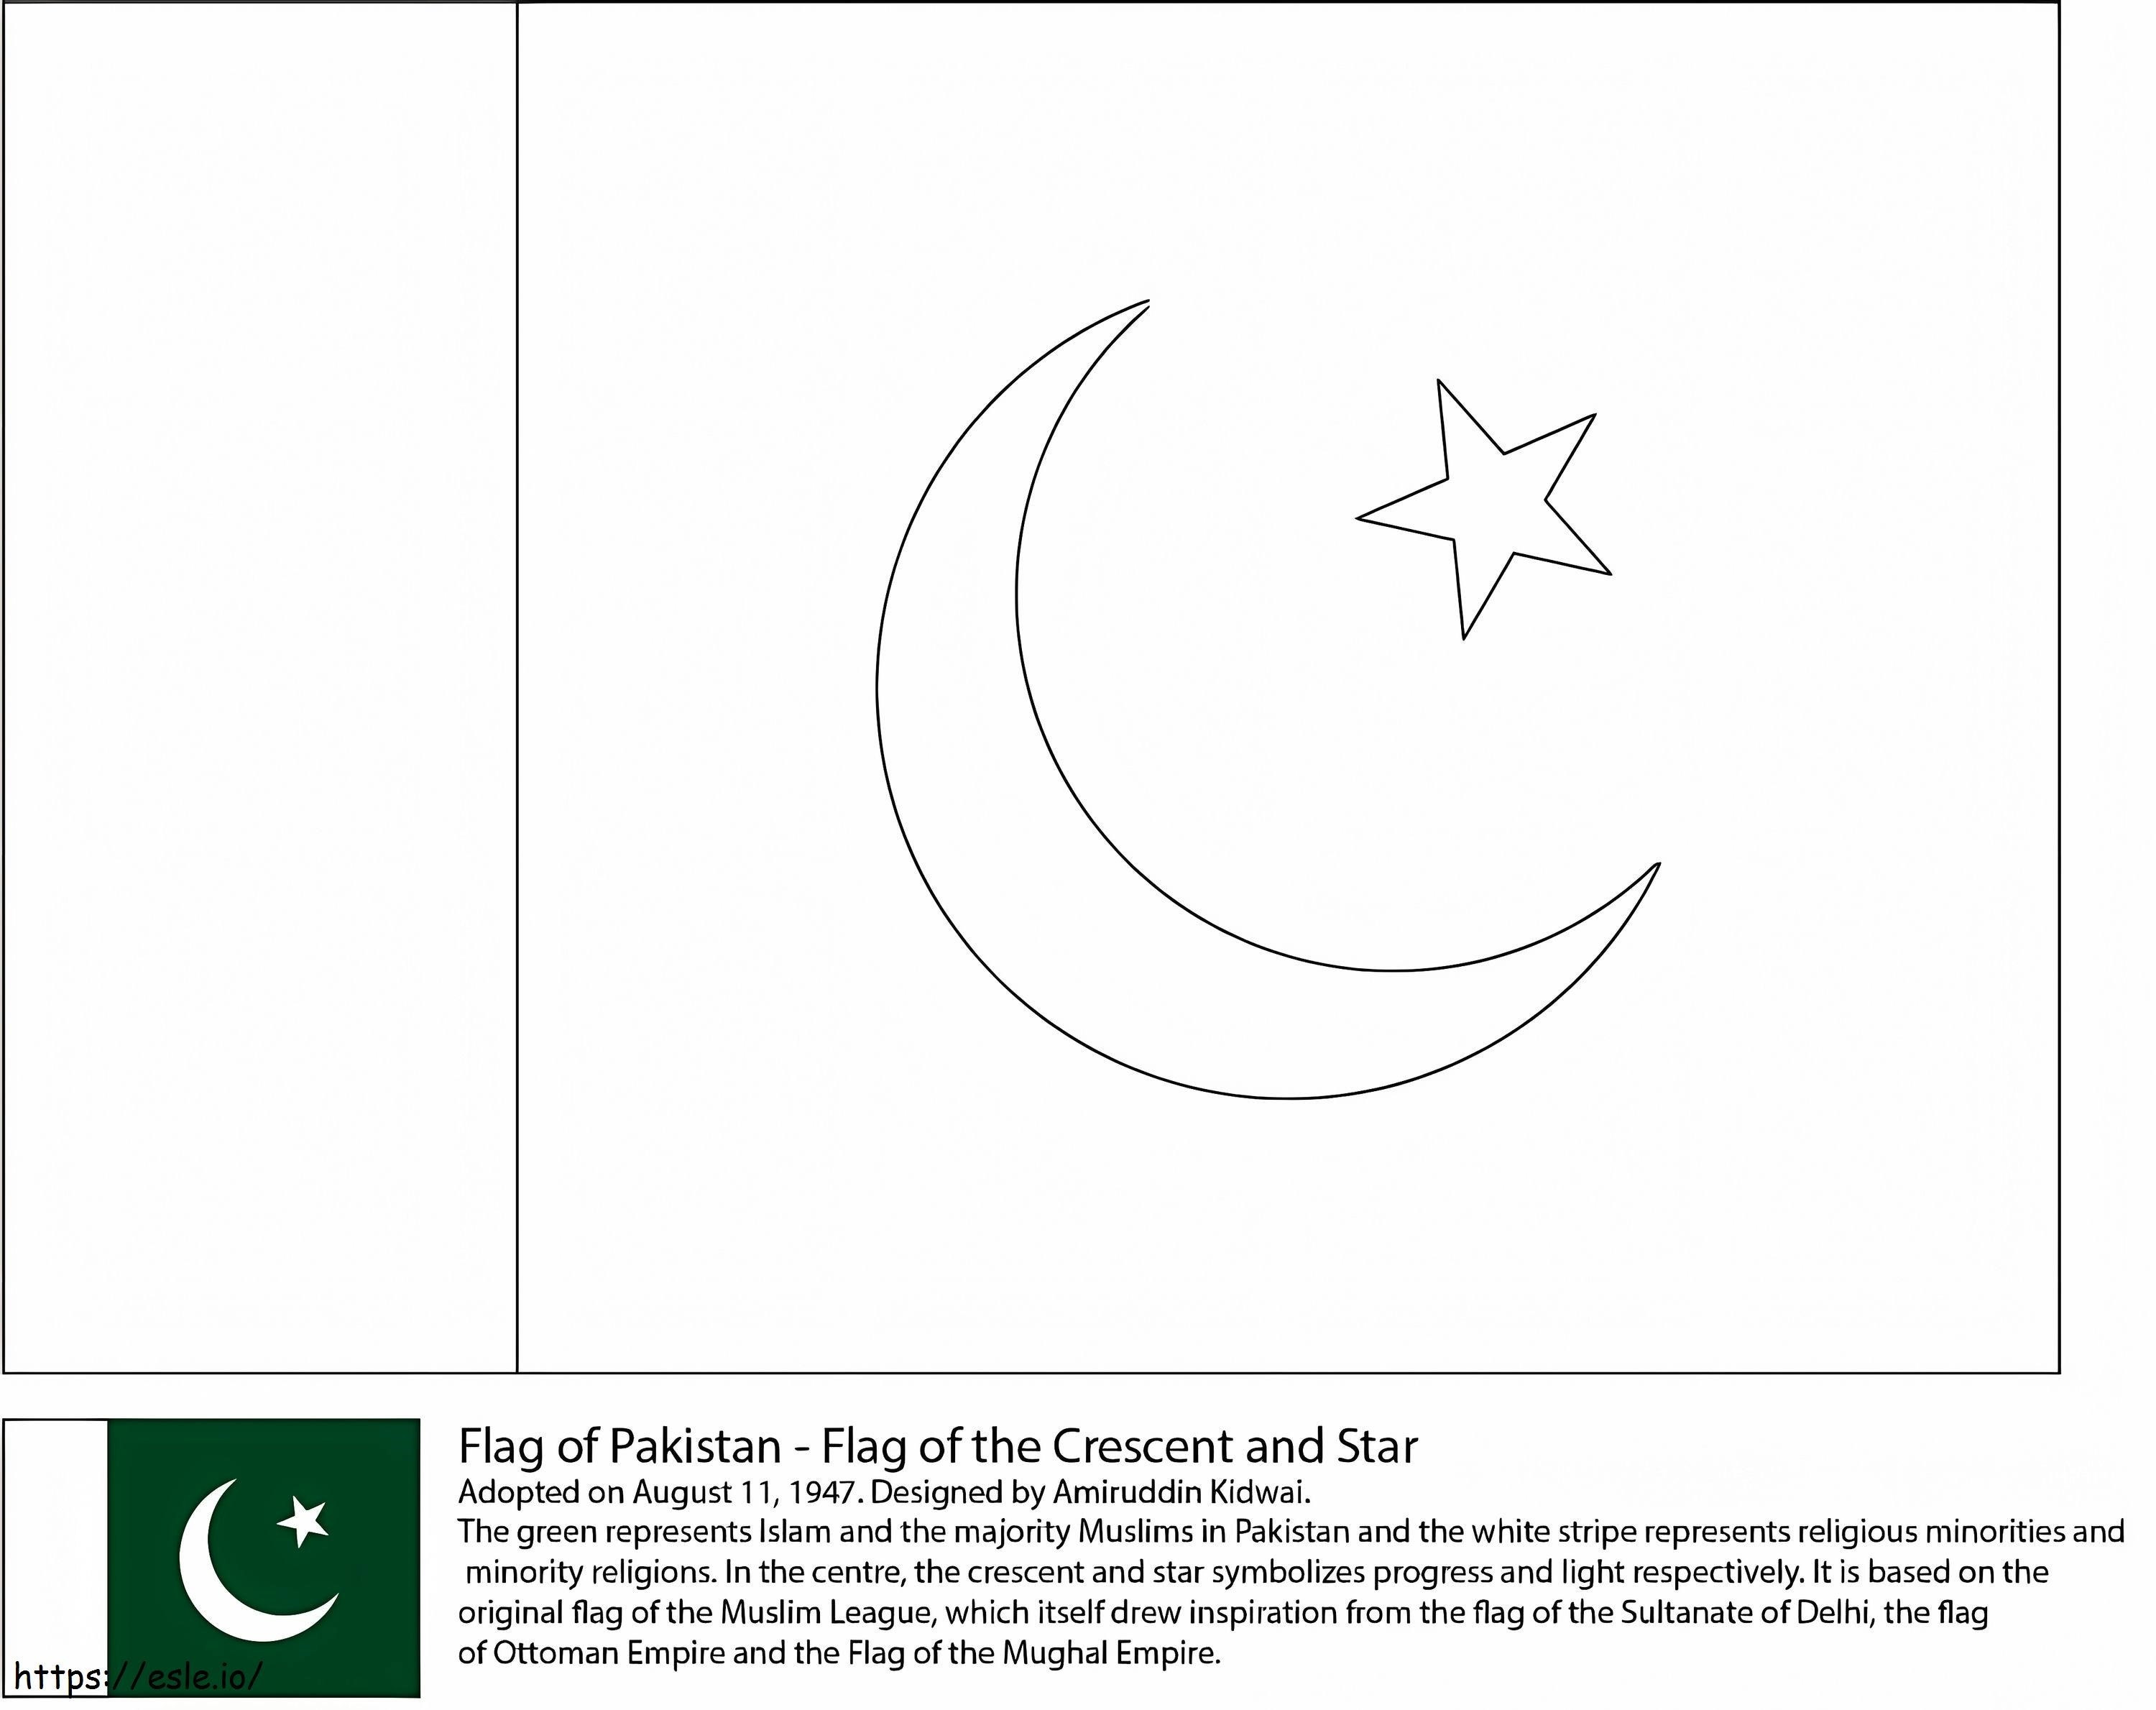 Pakistan Bayrağı boyama